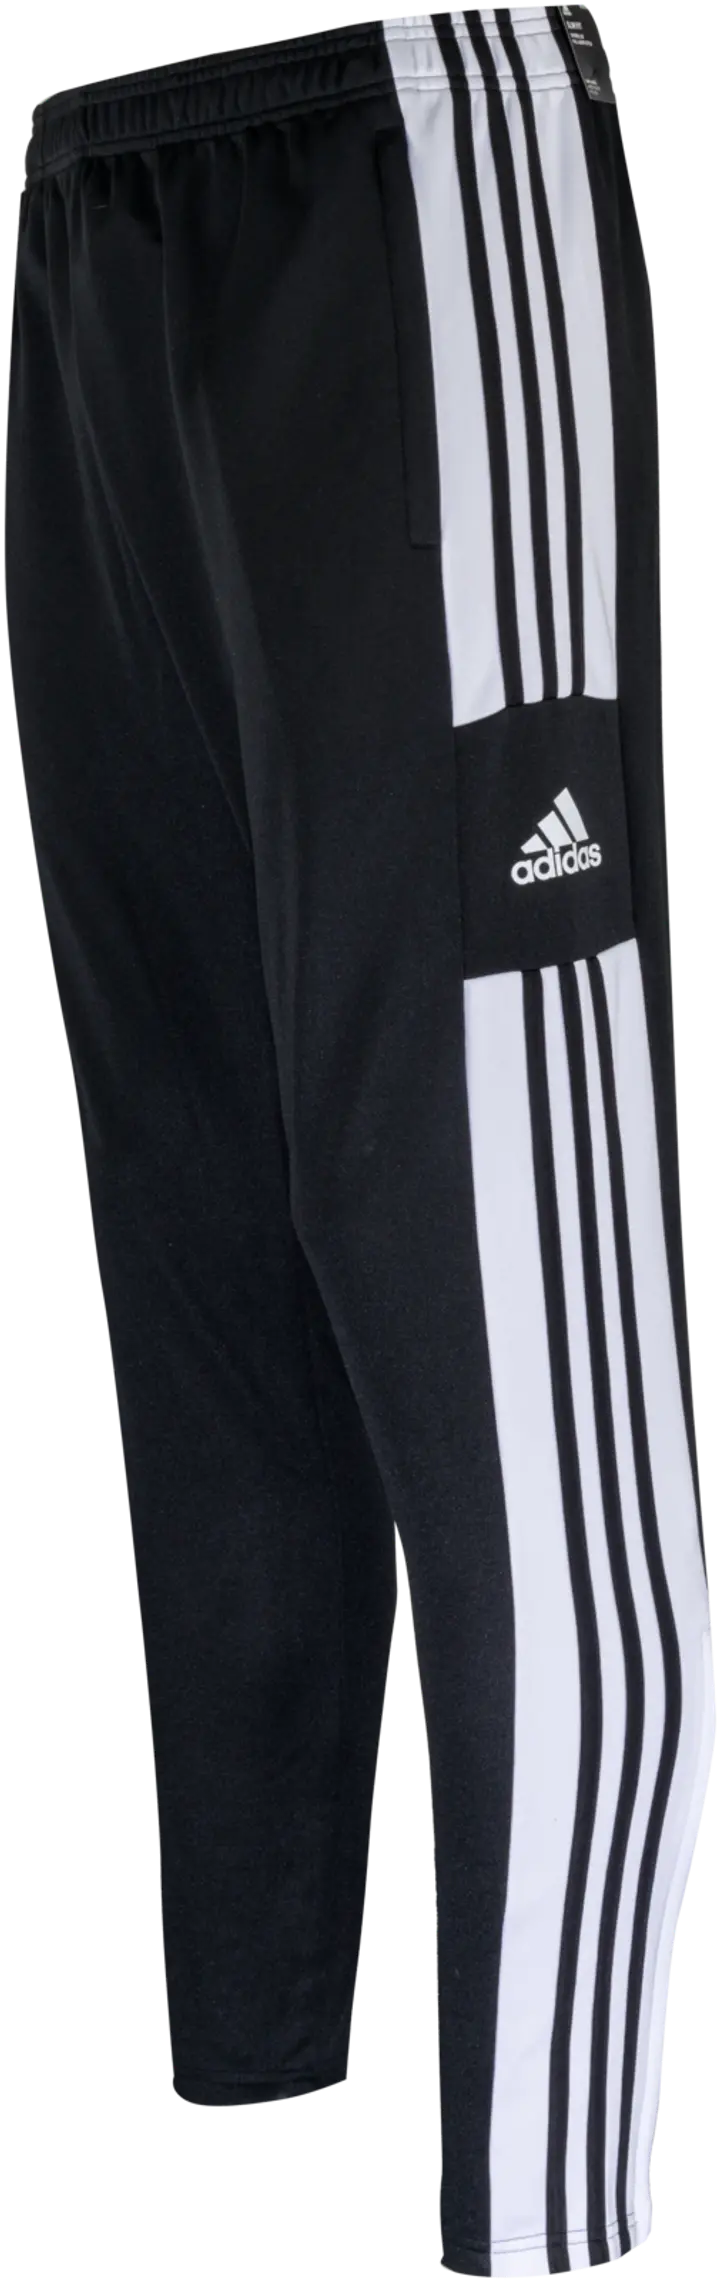 Adidas miesten verryttelyhousut Squadra - Musta/valkoinen